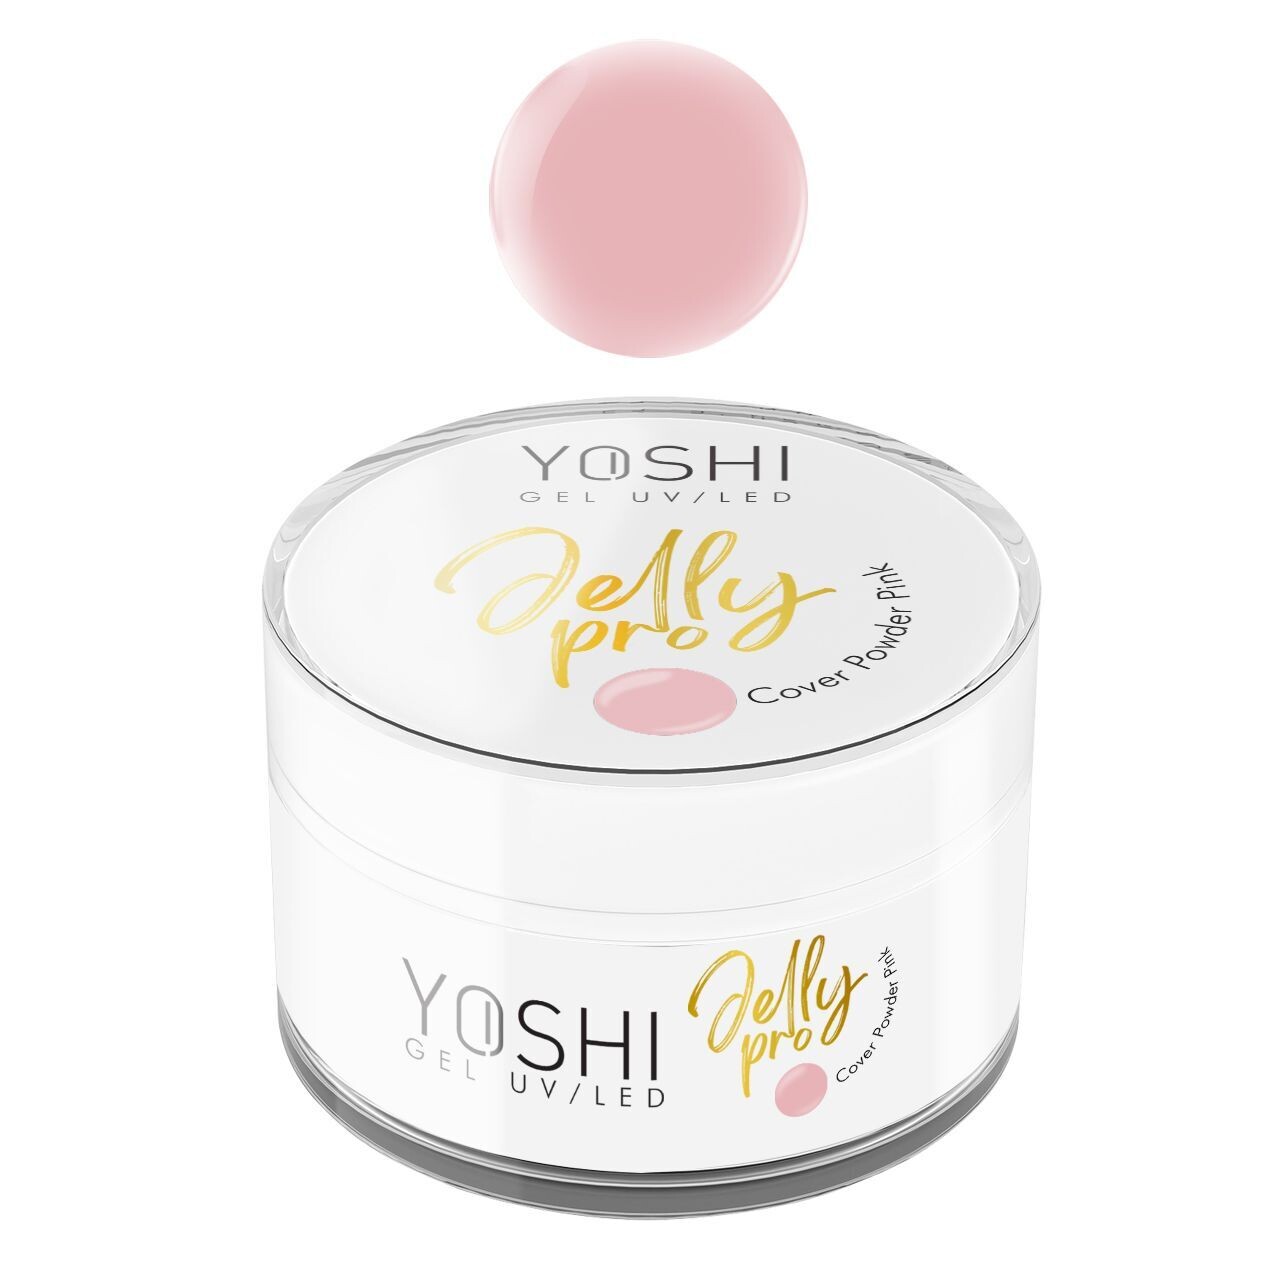 Yoshi Jelly Pro Uv Gel Cover Powder Pink 50 ml